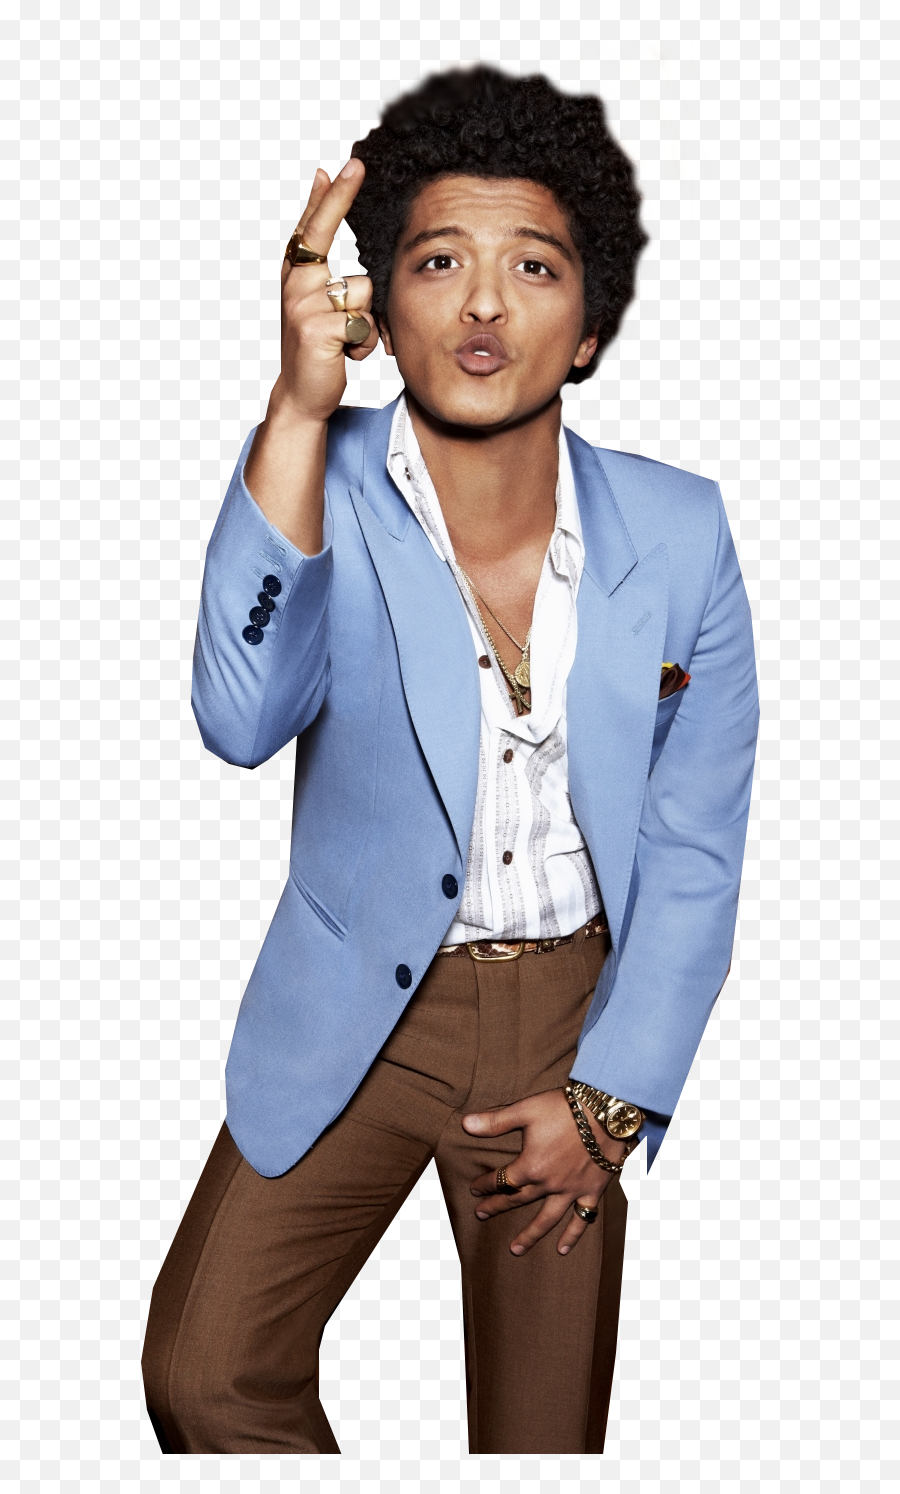 Bruno Mars - Bruno Mars Look Alike Singapore,Bruno Mars Png